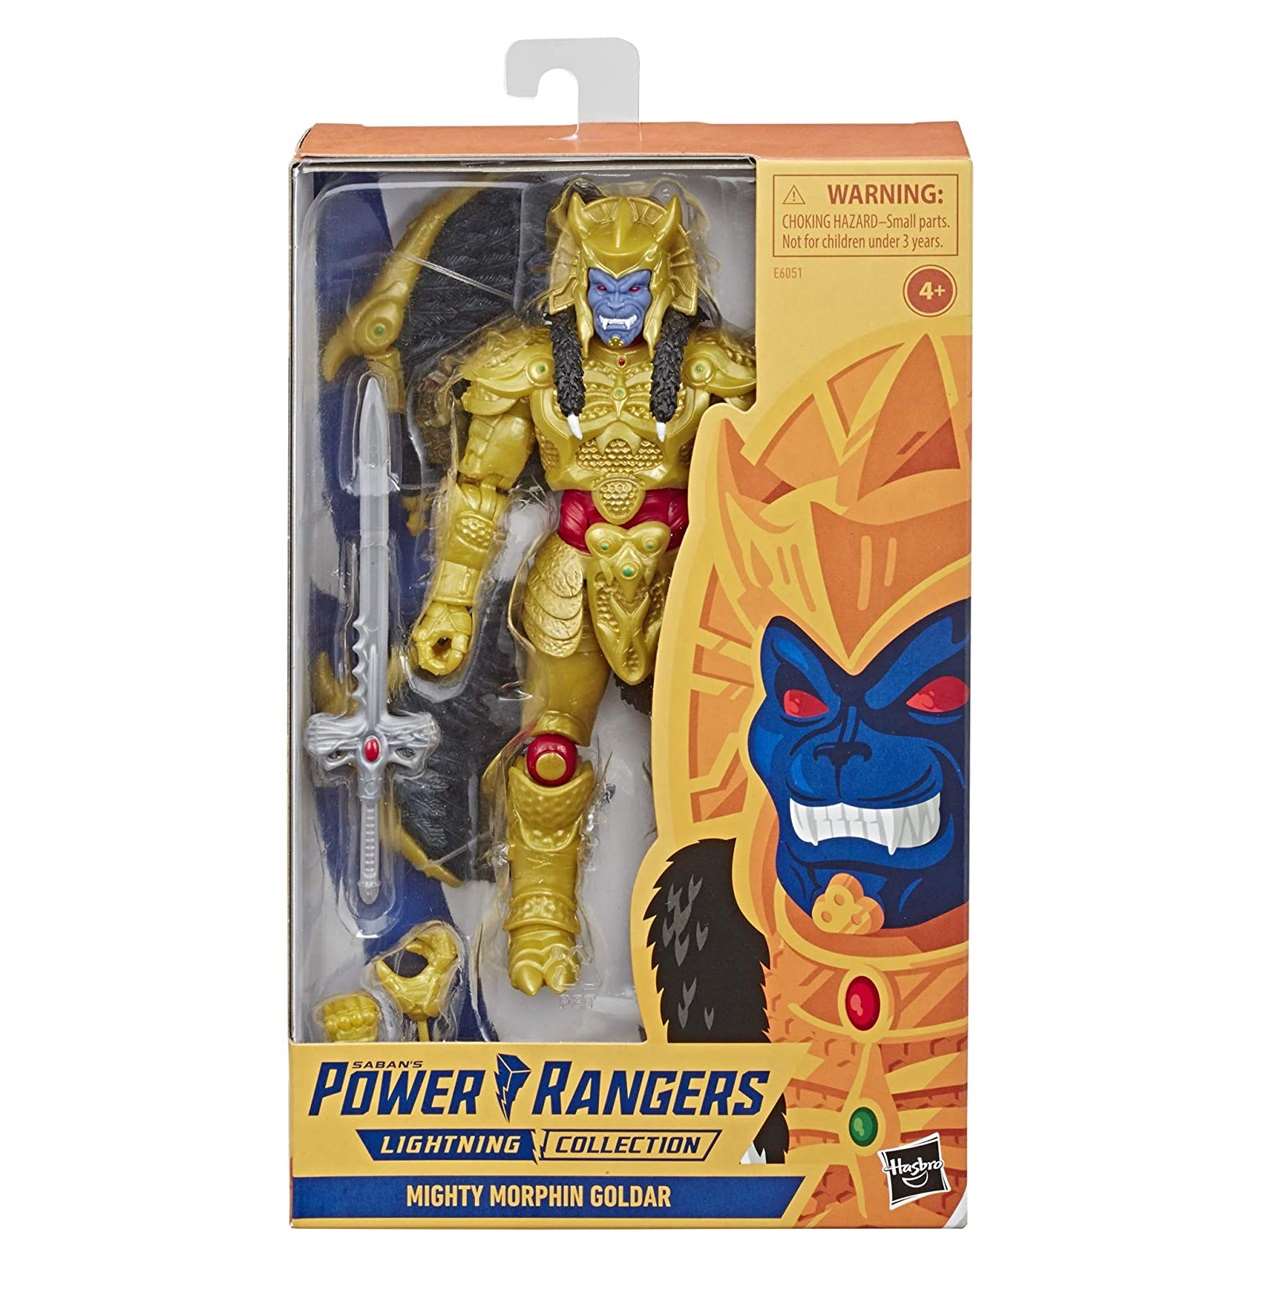 Power Rangers Lighting Collection Mighty Morphin Goldar